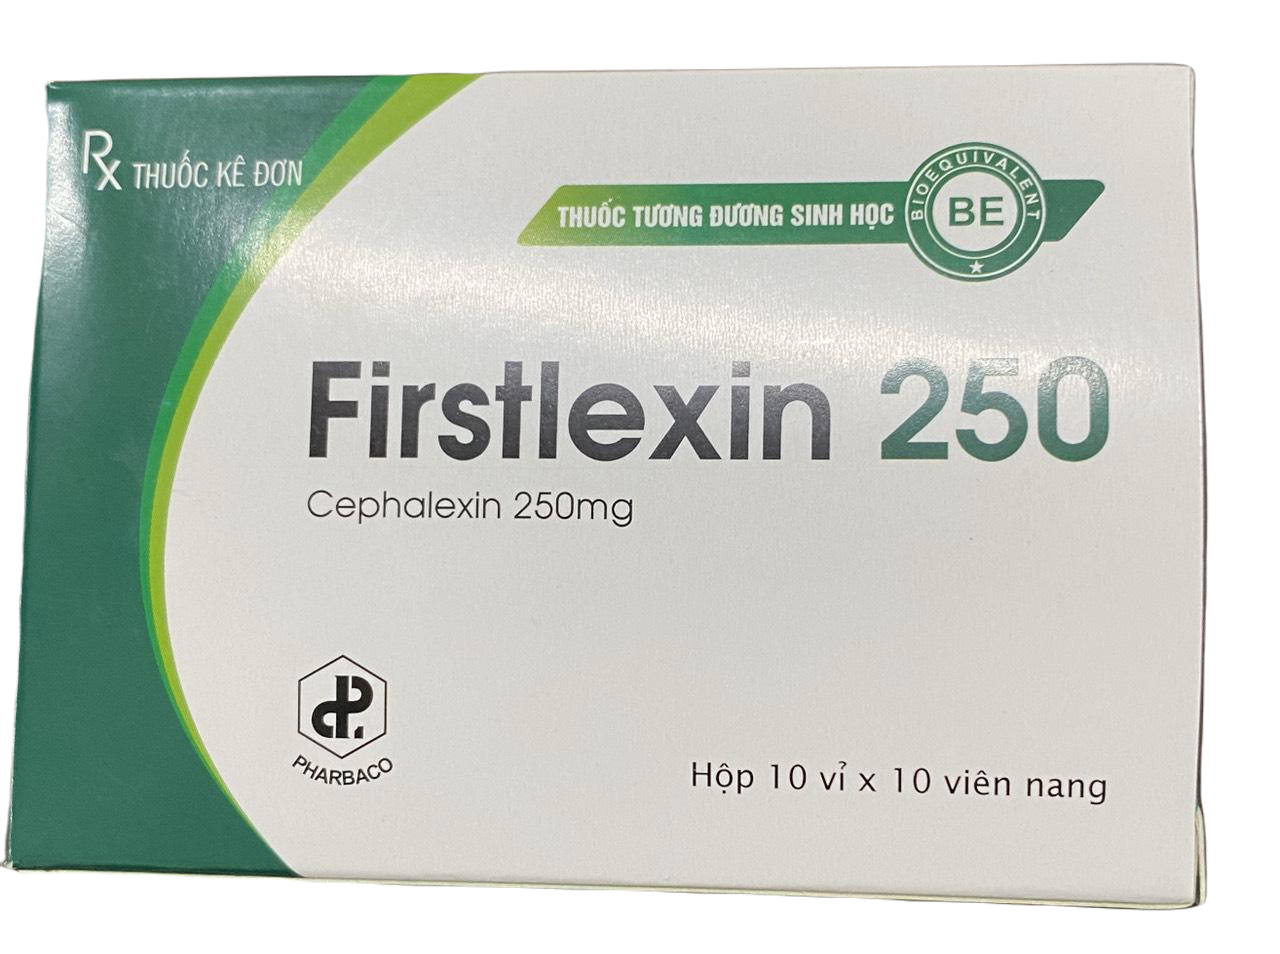 Firstlexin 250 (Cephalexin) Pharbaco (H/100v)